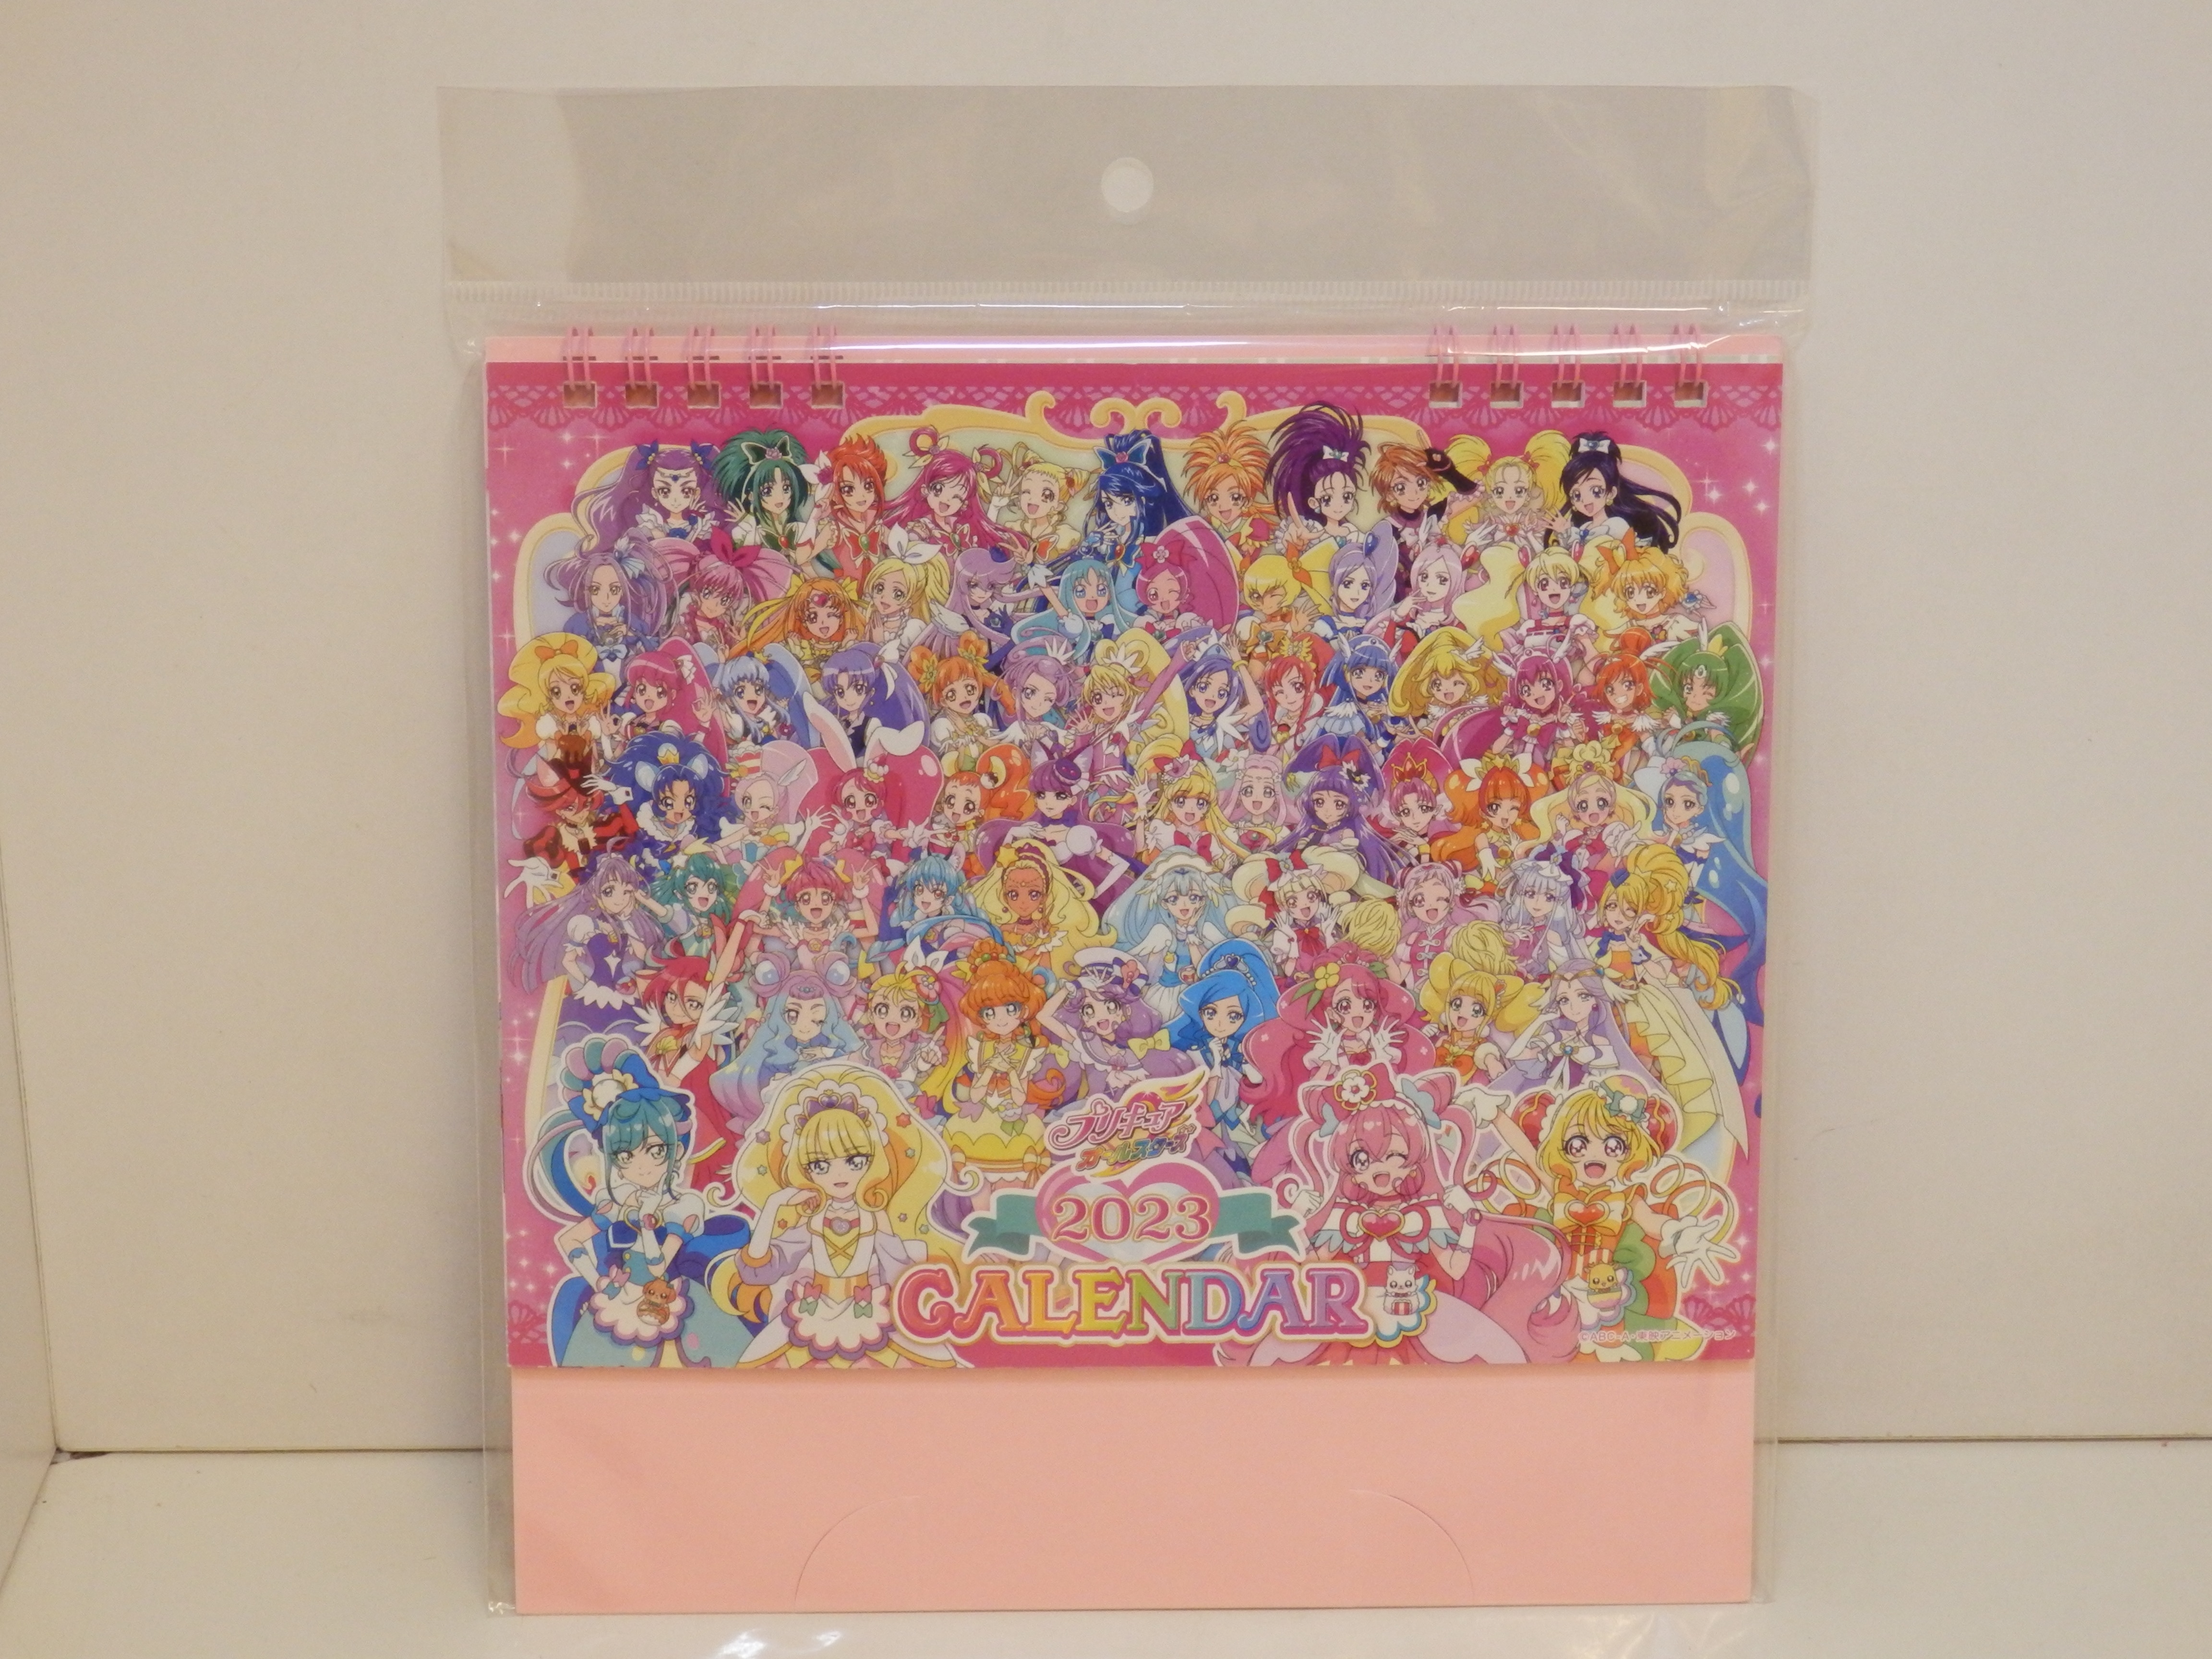 Precure Pretty Cure All Stars Desktop Calendar 2023 CL-015 Toei